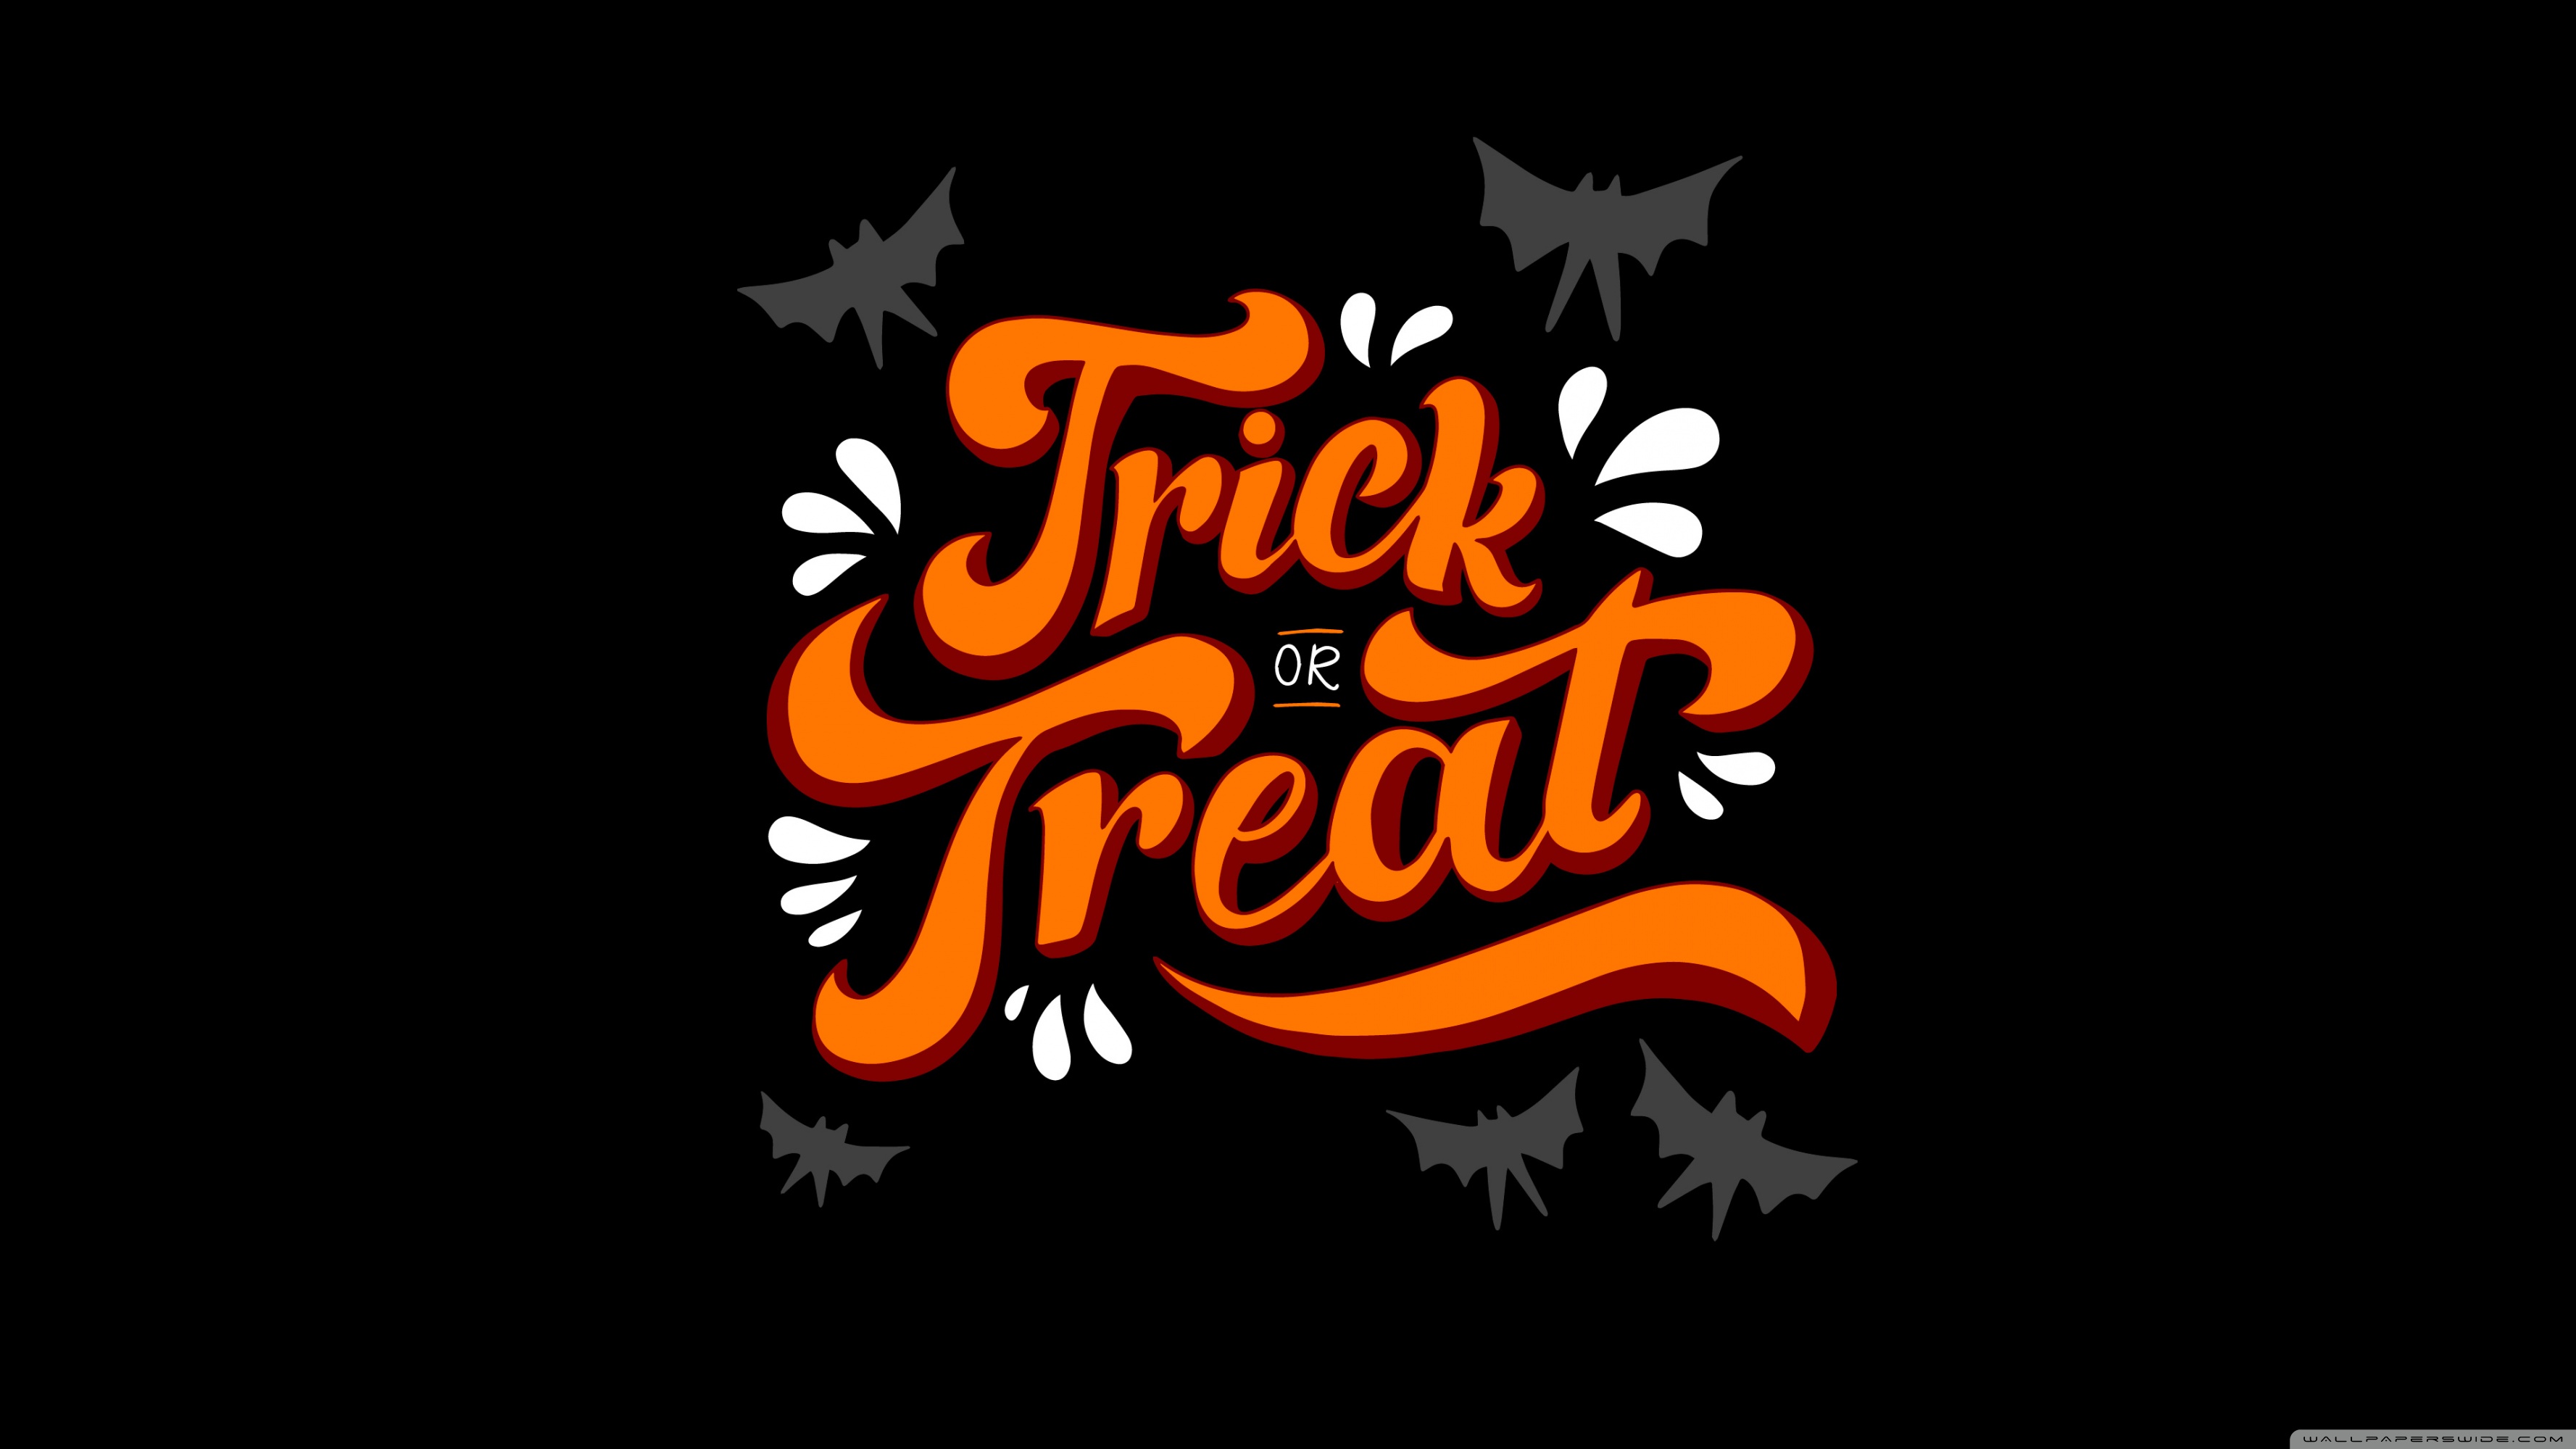 Download Trick 'r Treat Film Halloween Computer Wallpaper | Wallpapers.com